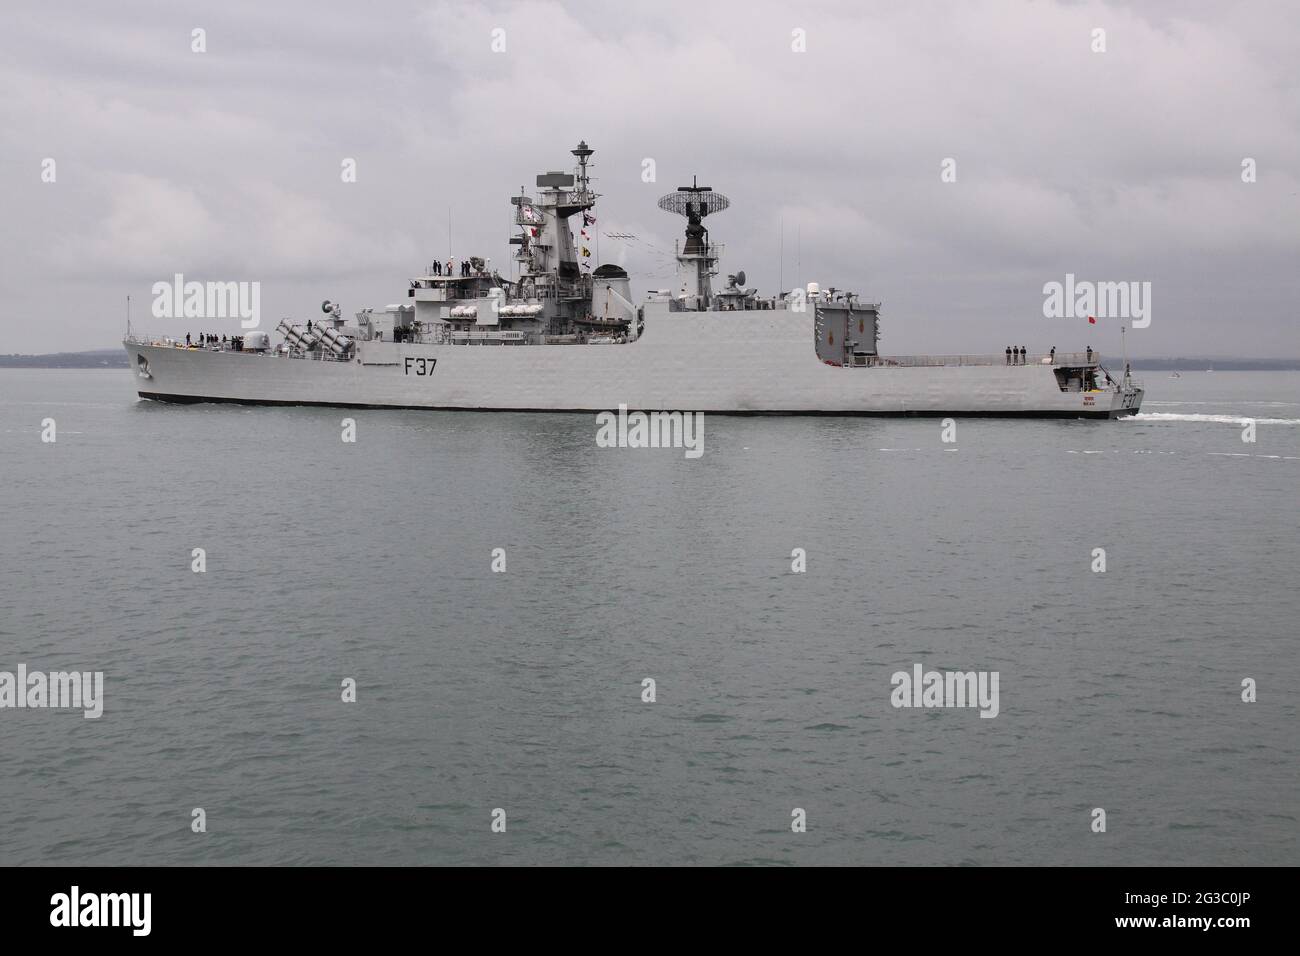 El buque de la Marina de la India, BEAS, abandona la Base Naval Foto de stock